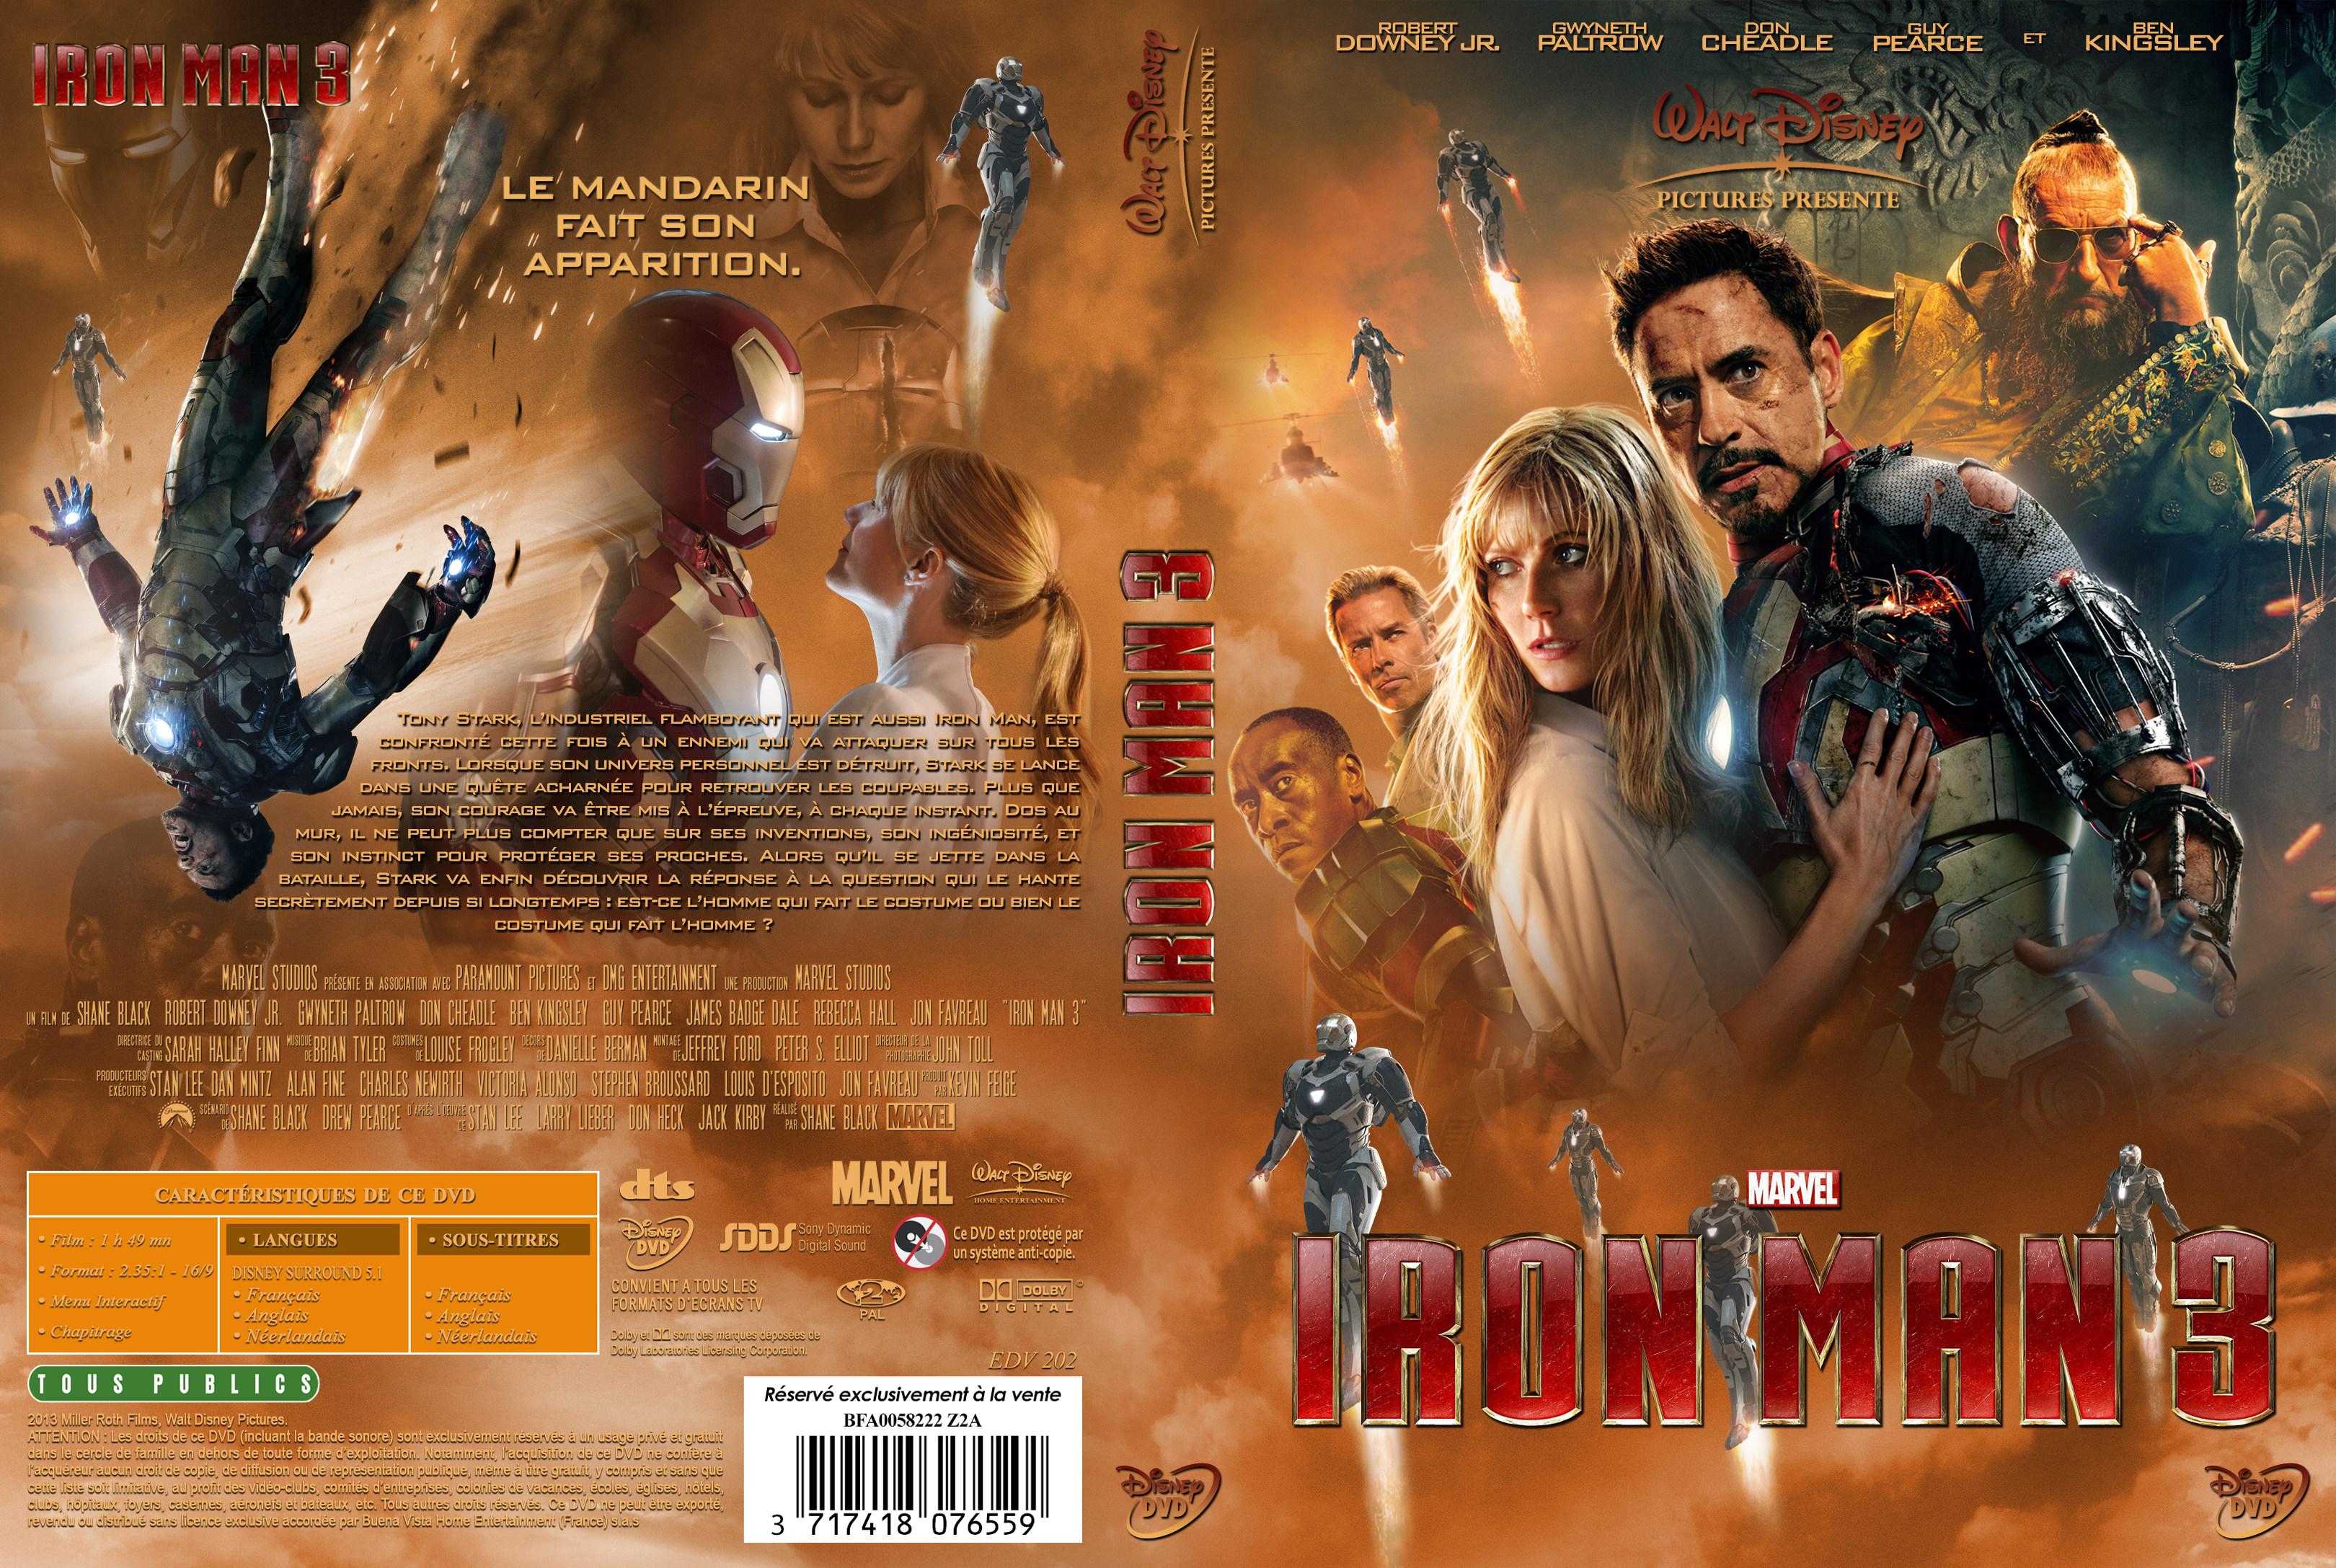 Jaquette DVD Iron Man 3 custom